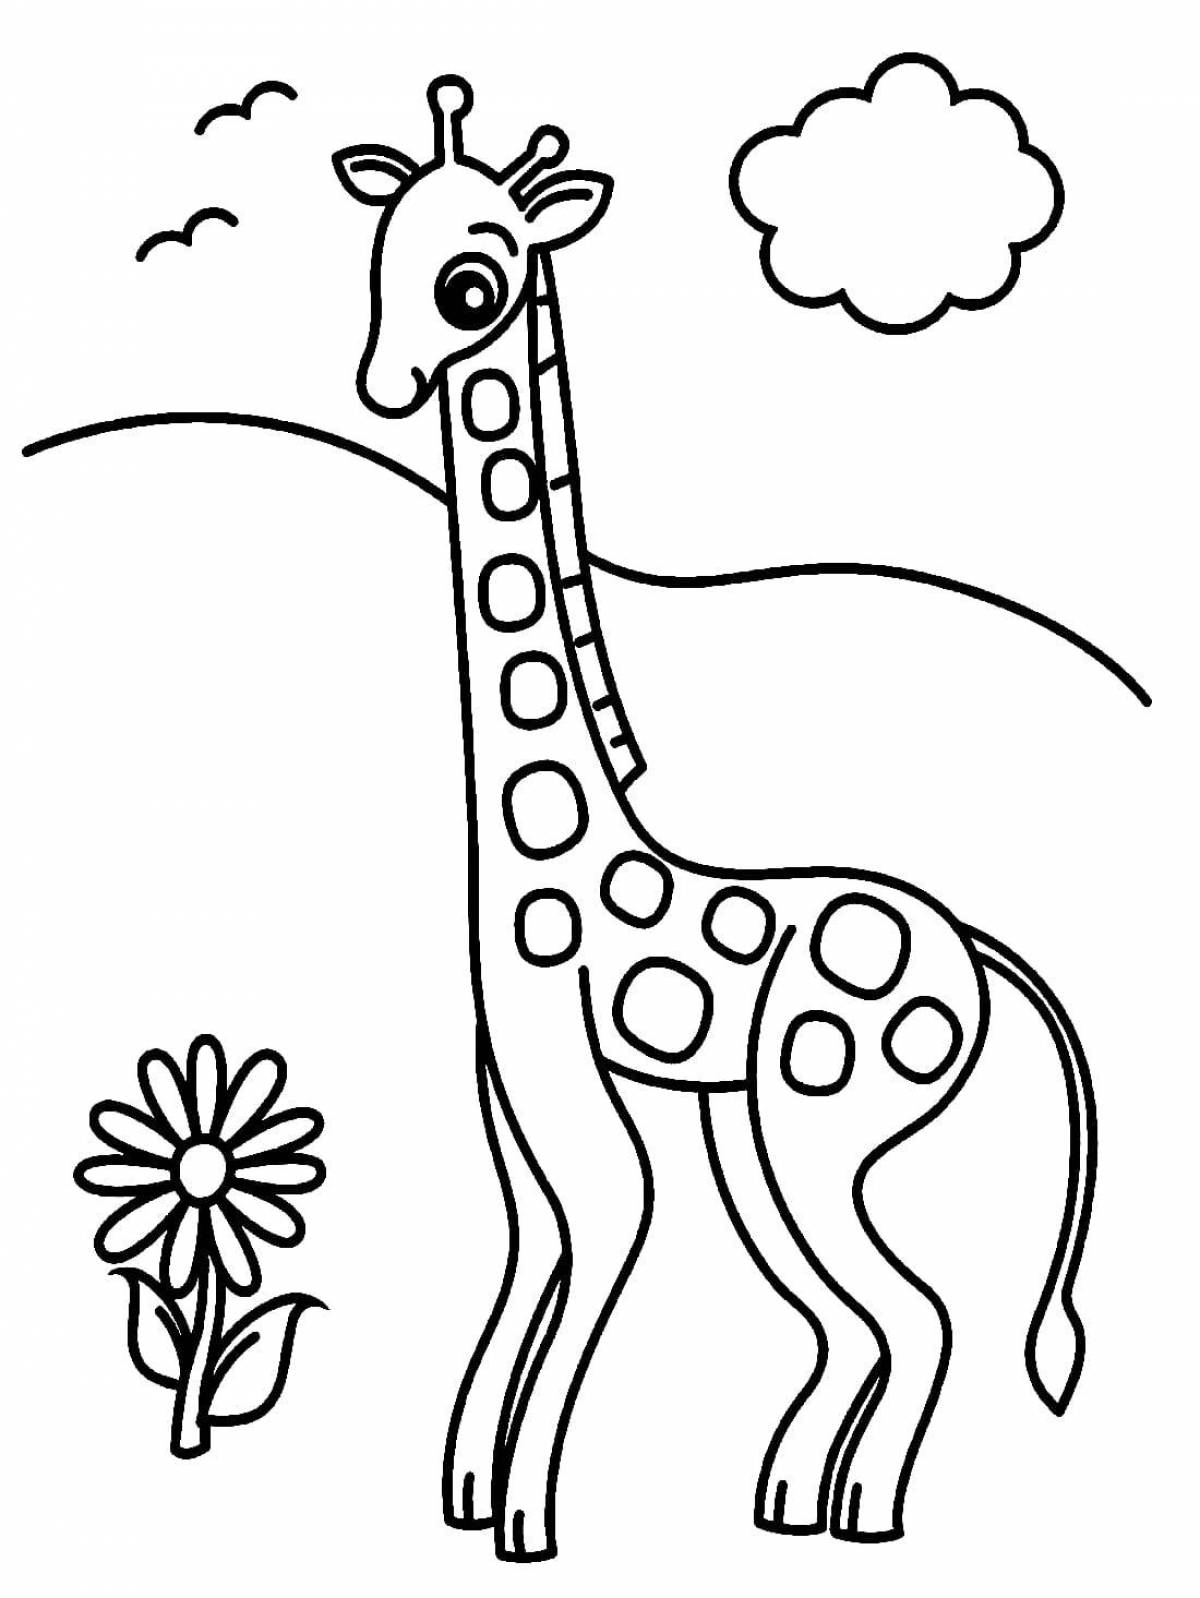 Funny giraffe coloring book for kids